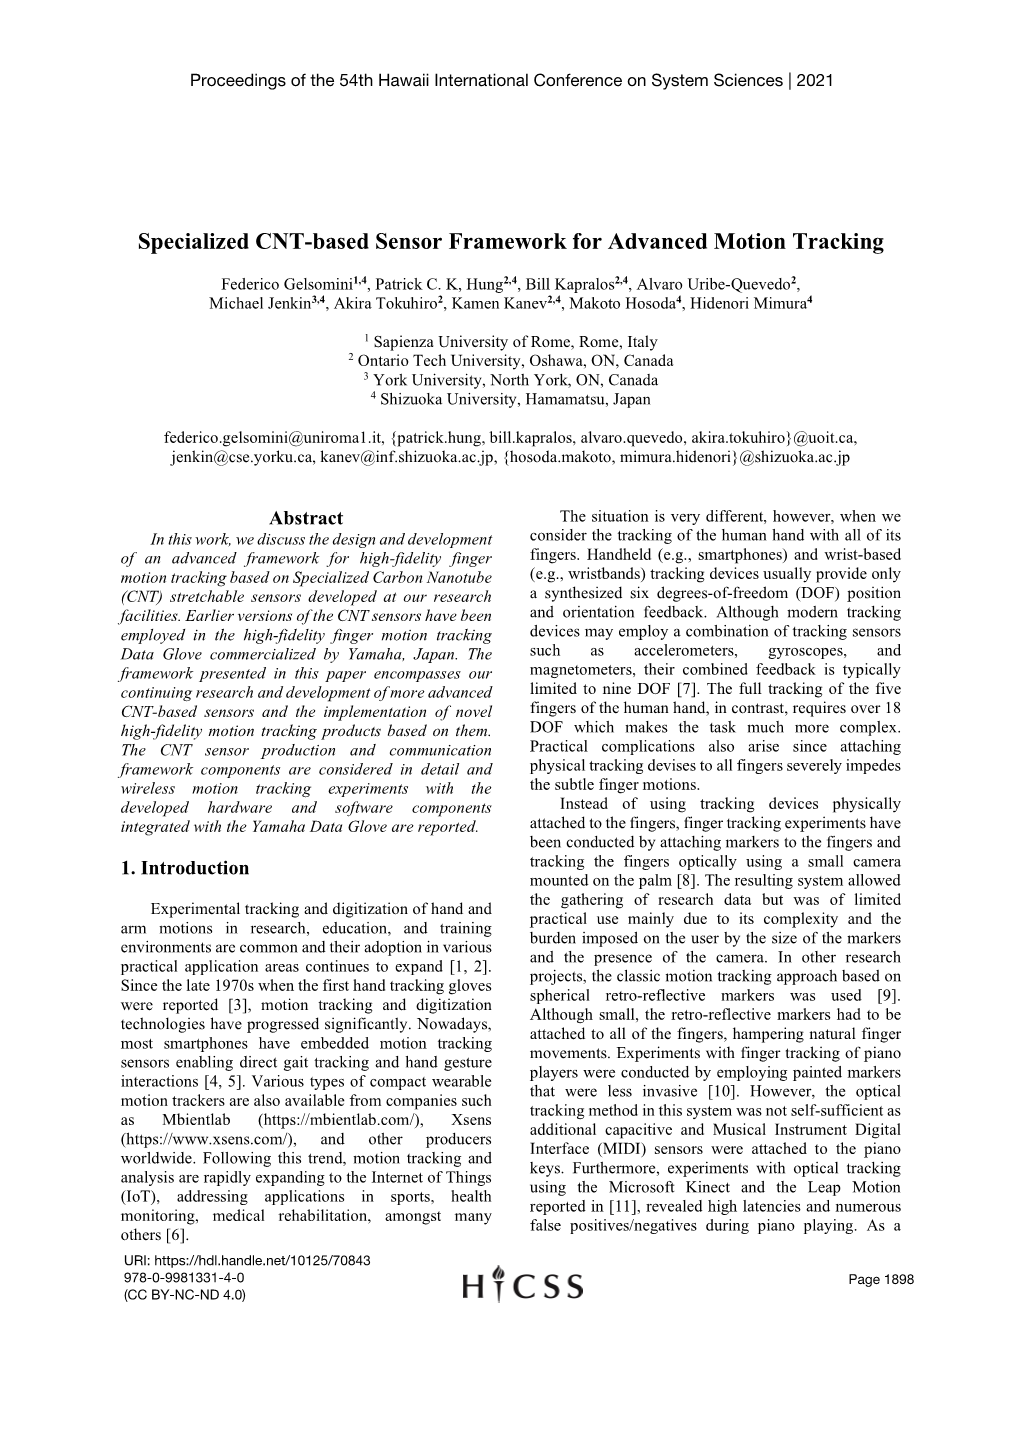 Specialized CNT-Based Sensor Framework for Advanced Motion Tracking